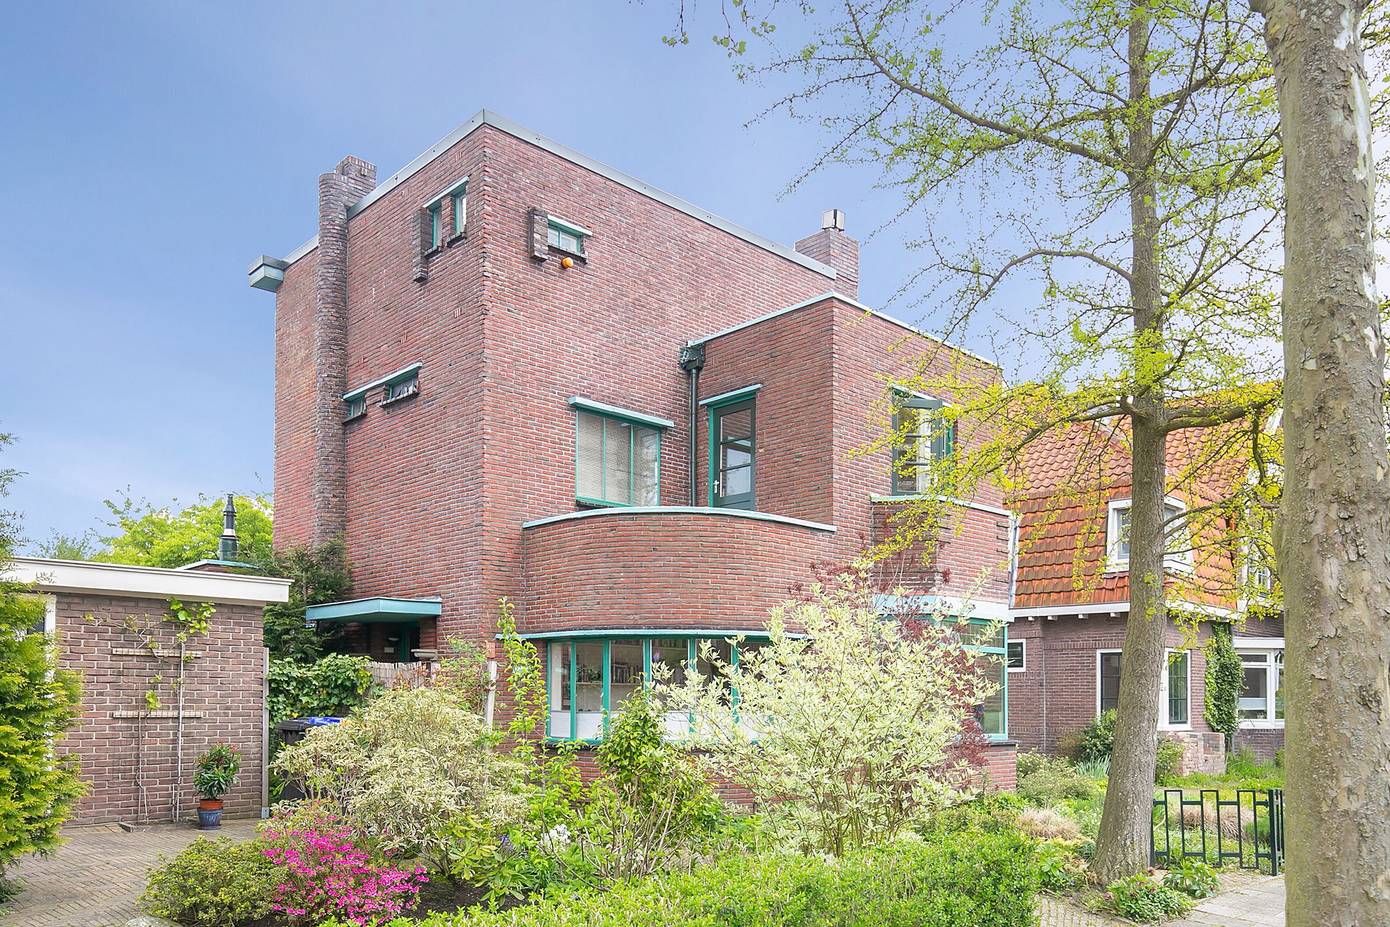 Te koop in Assen: karakteristieke vrijstaande woning met grote tuin in Oud-Zuid